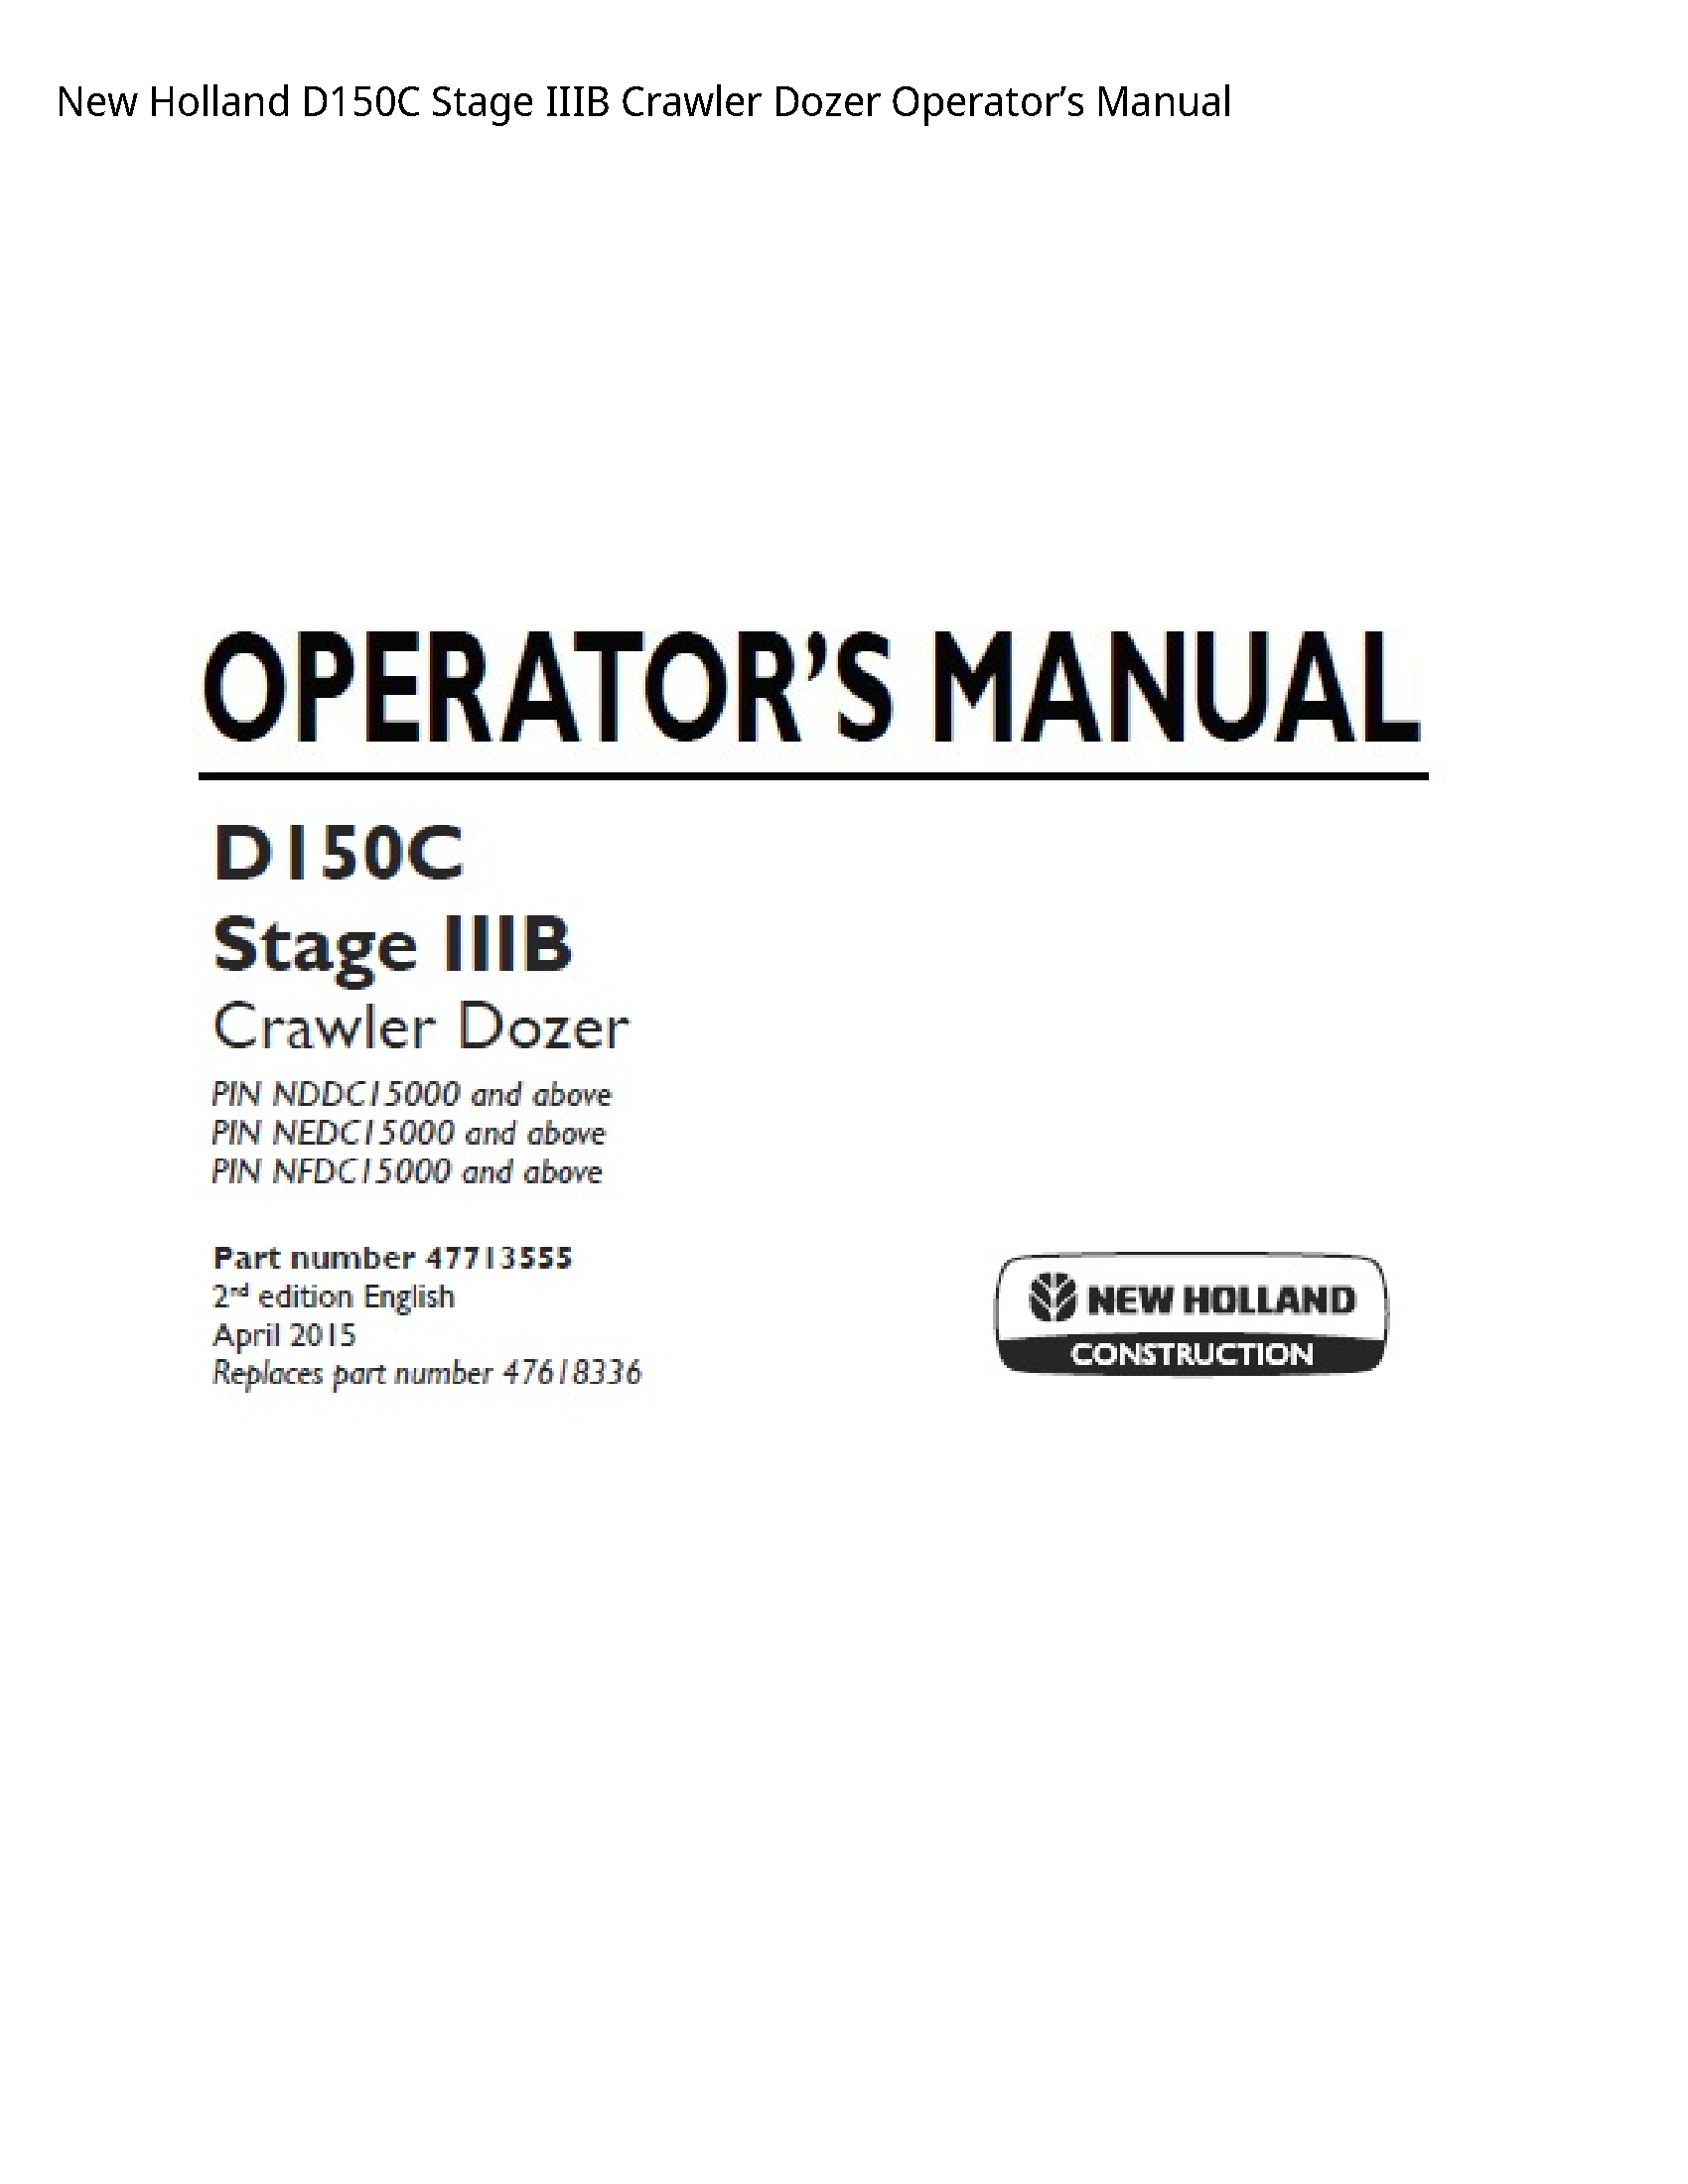 New Holland D150C Stage IIIB Crawler Dozer Operator’s manual